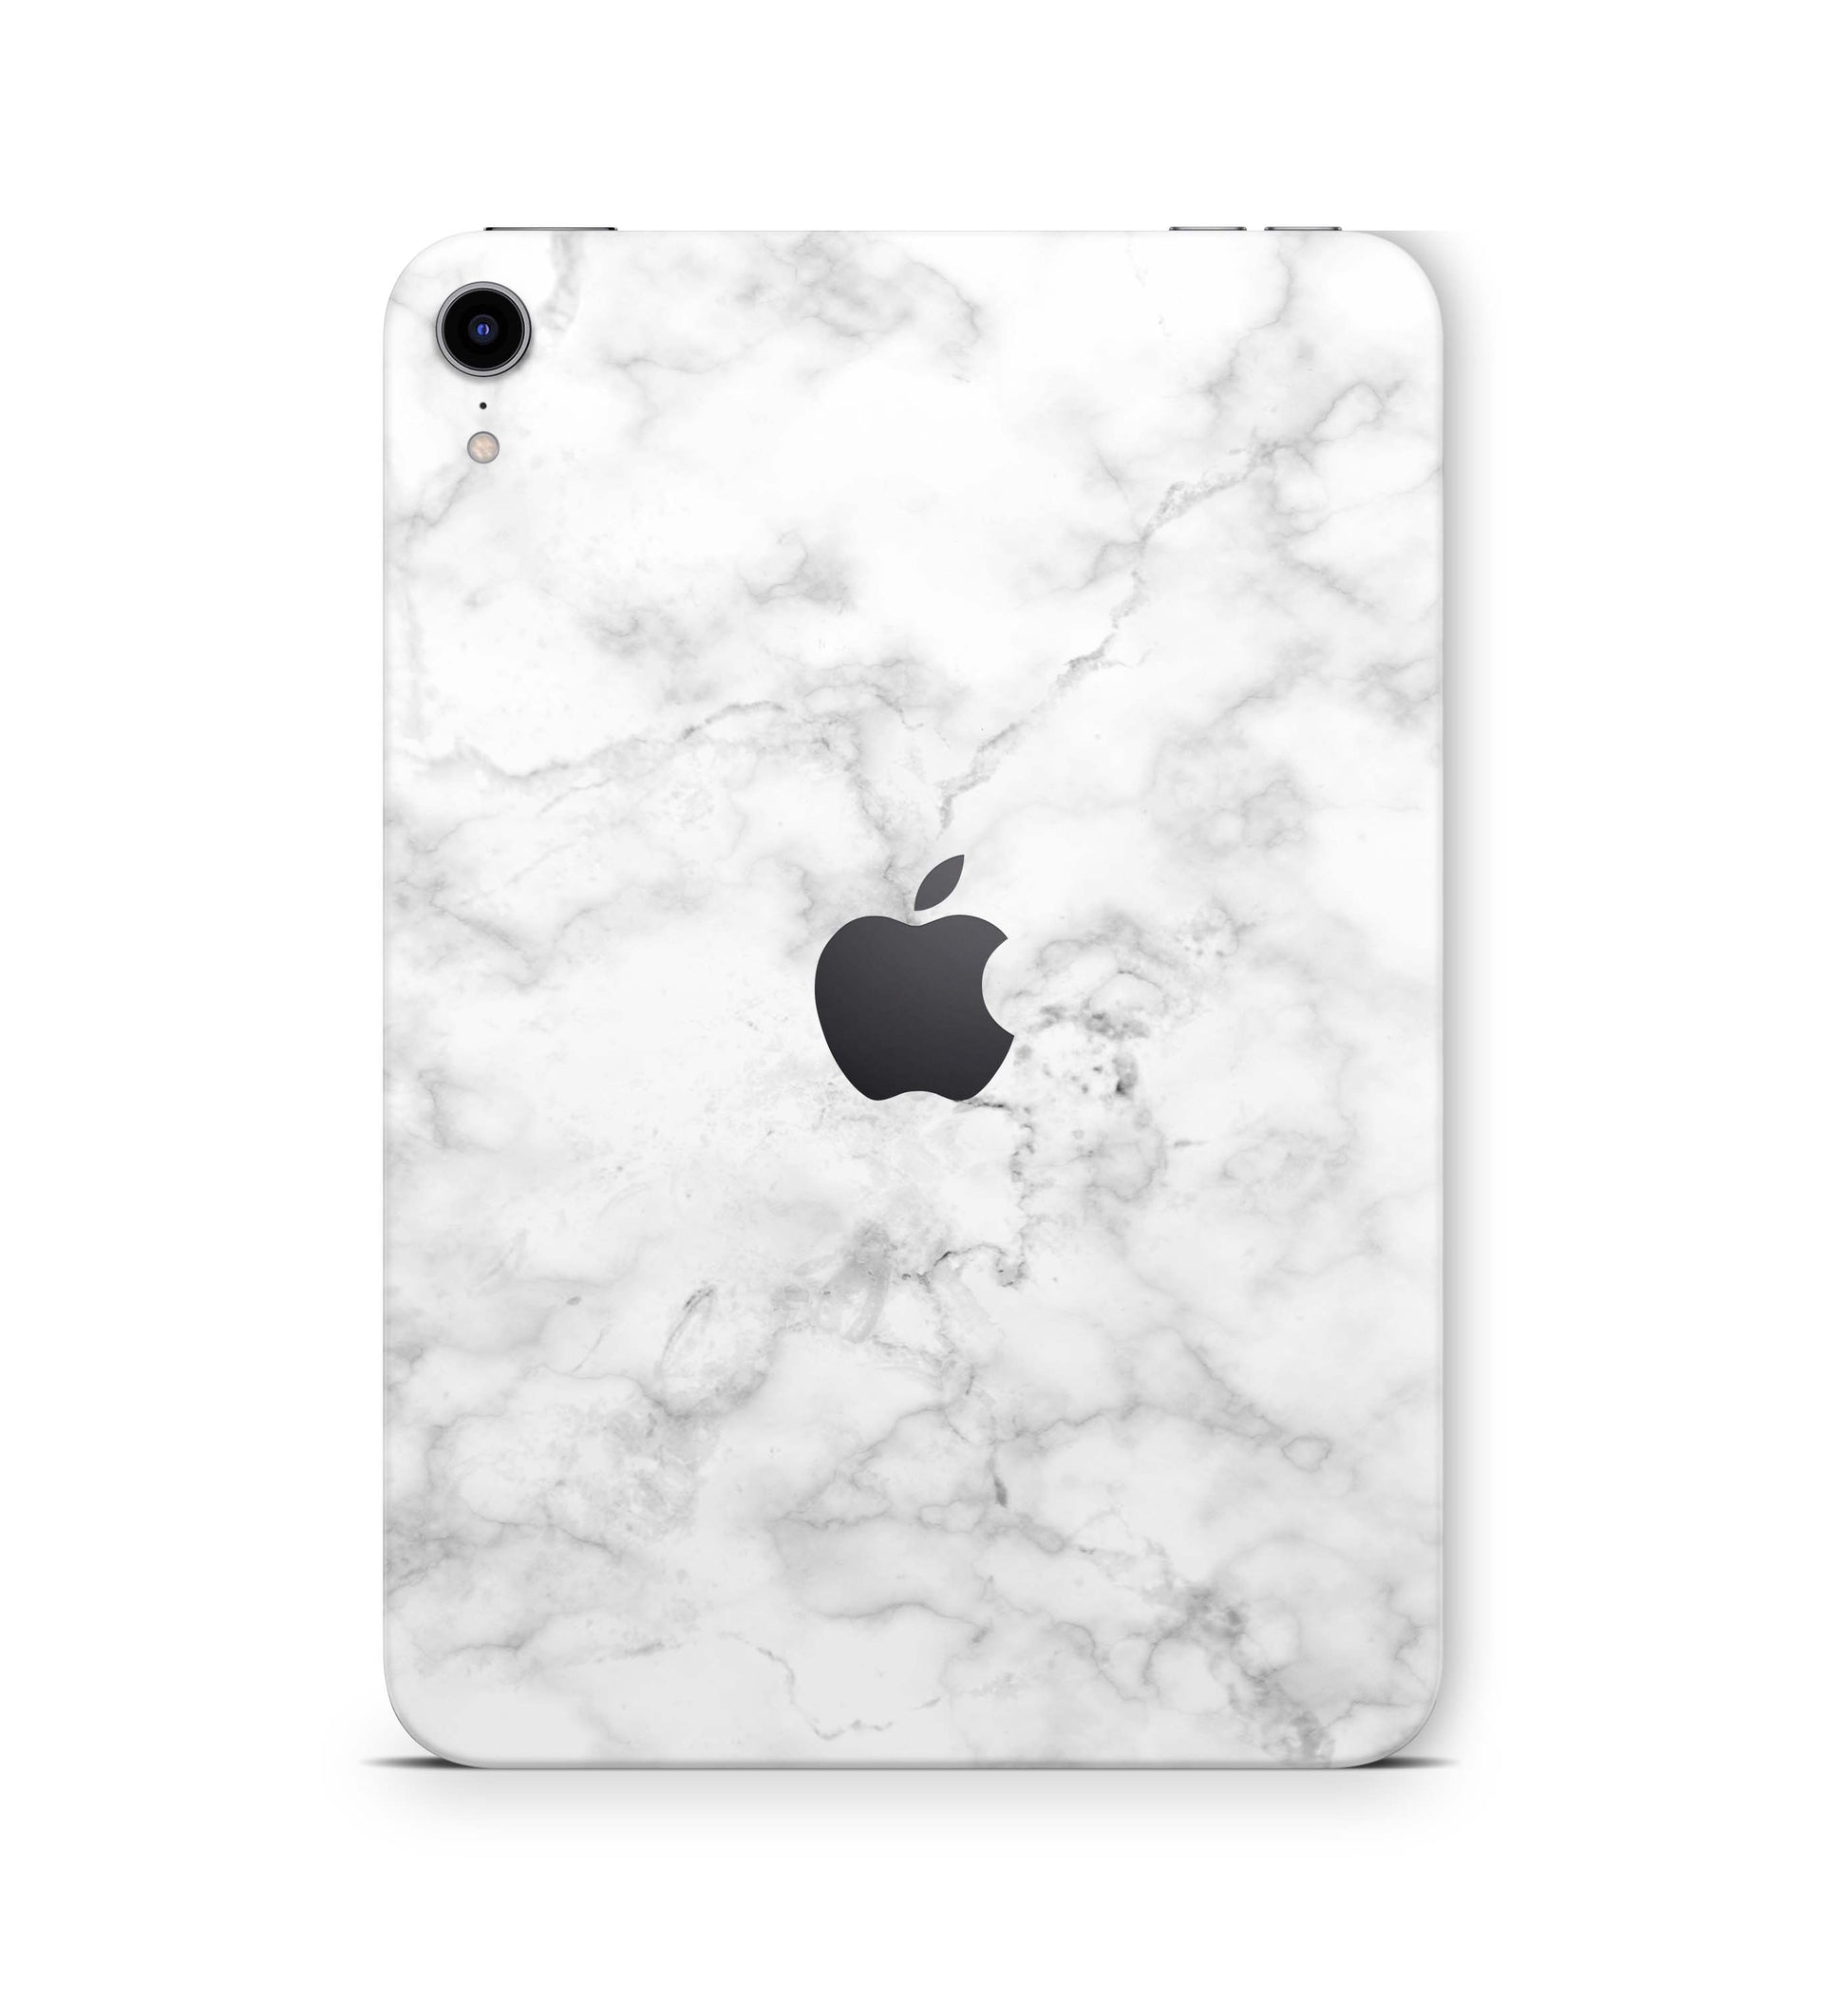 iPad Mini Skin Design Cover Folie Vinyl Skins & Wraps für alle iPad Mini Modelle Aufkleber Skins4u Marmor weiss  